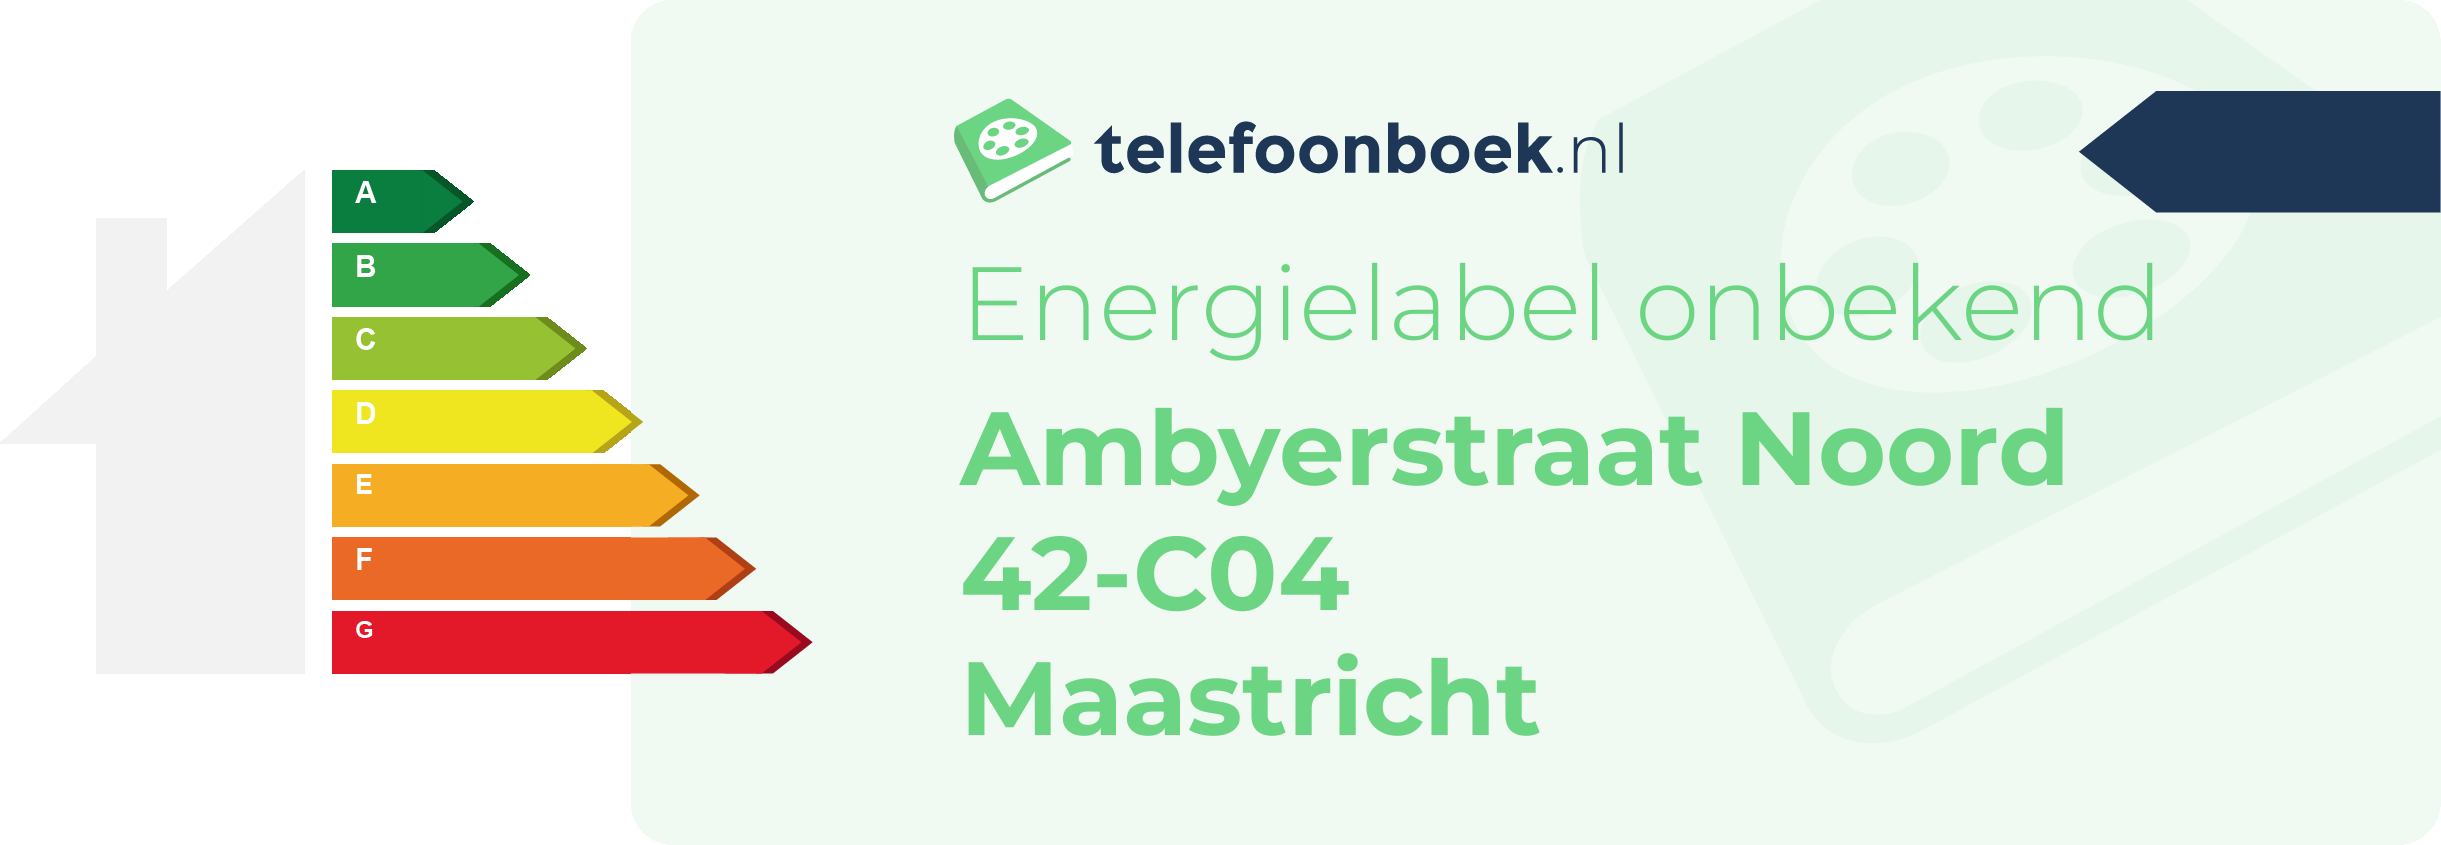 Energielabel Ambyerstraat Noord 42-C04 Maastricht